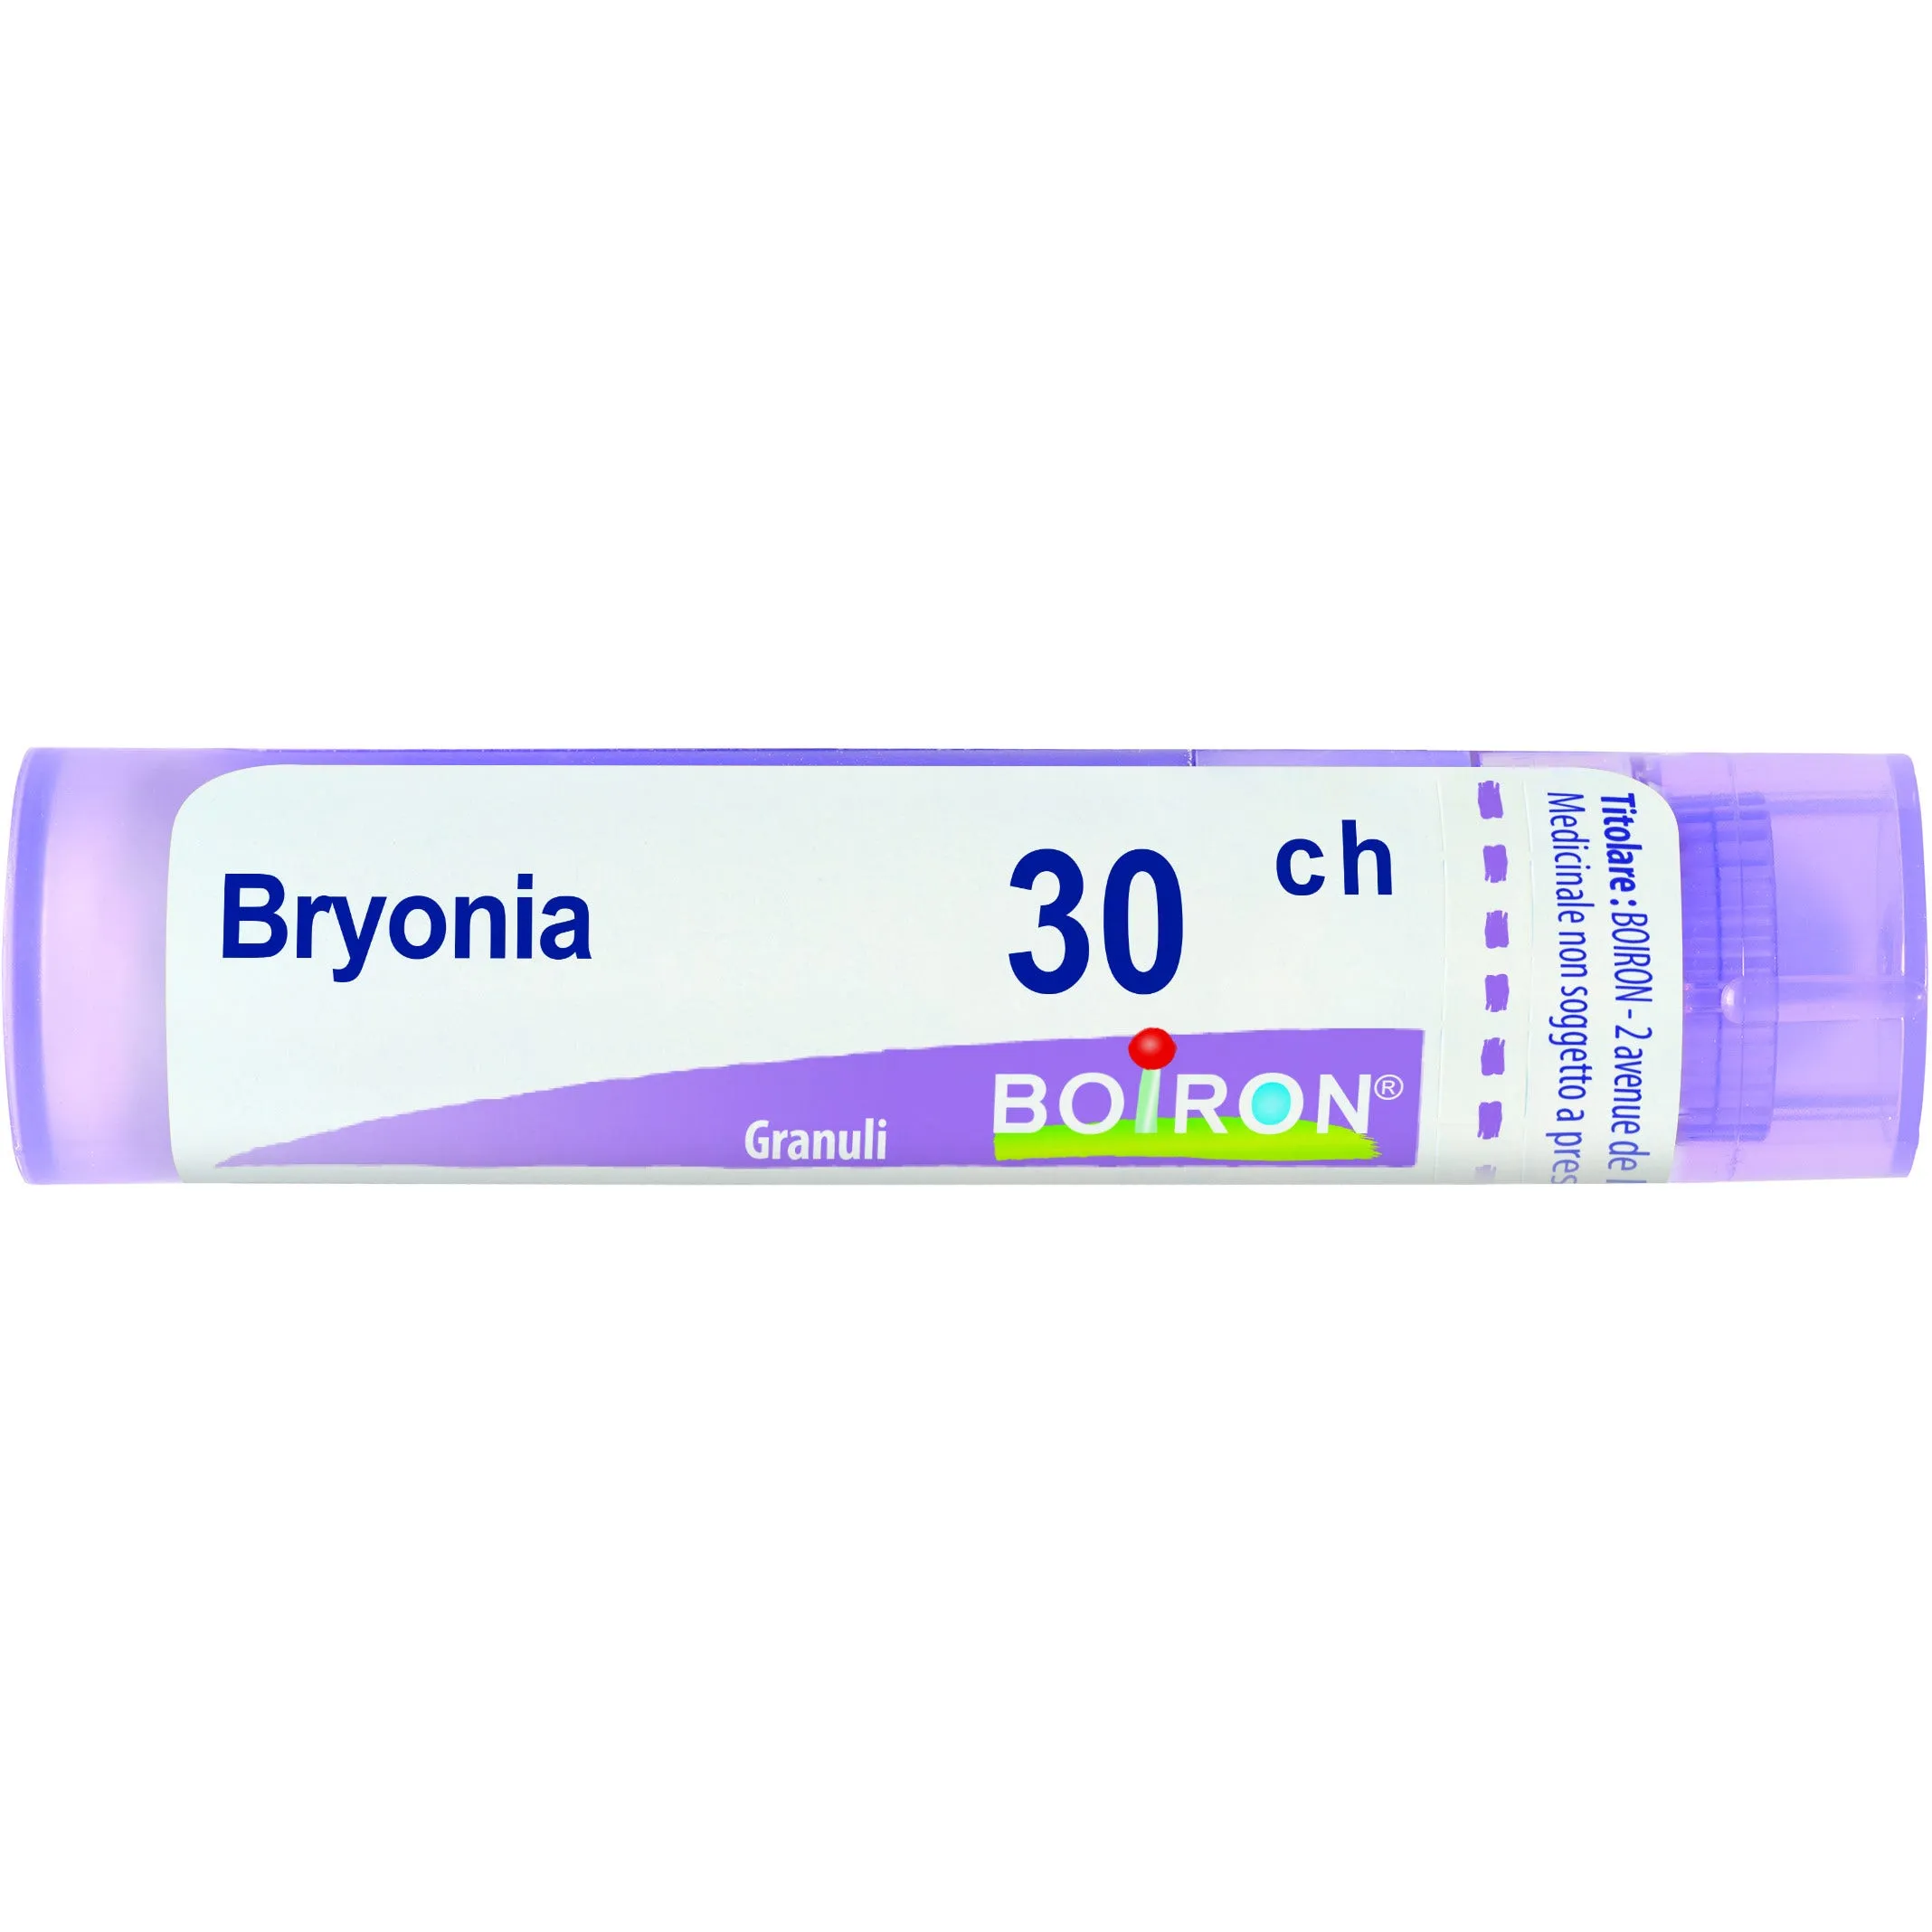 Bryonia Granuli 30 Ch Contenitore Multidose